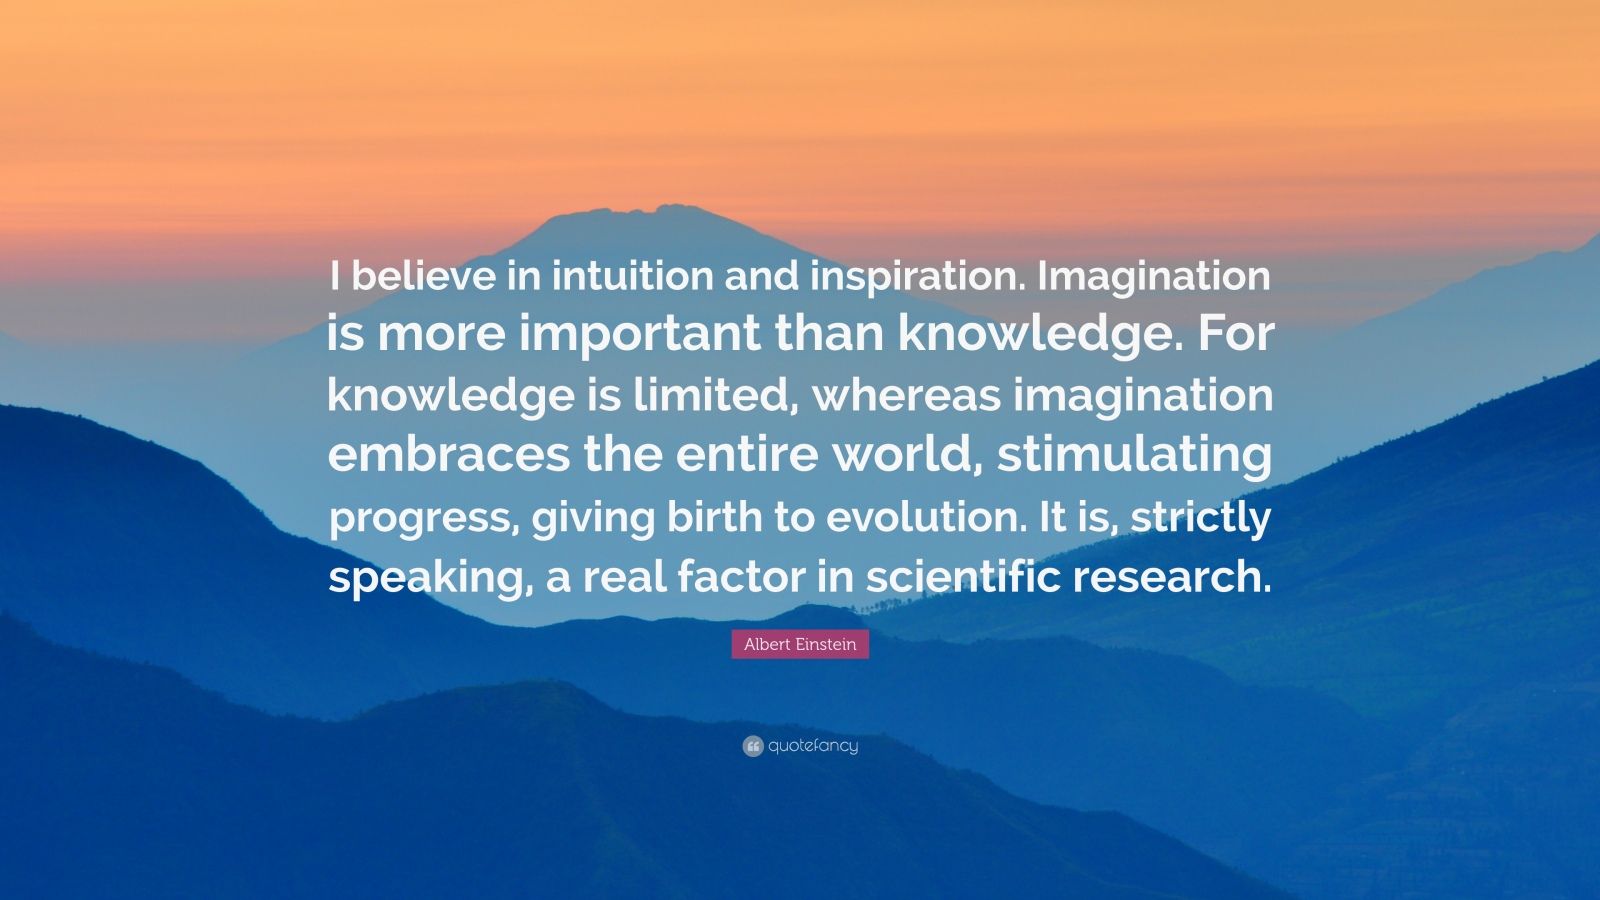 Albert Einstein Quote “I believe in intuition and inspiration